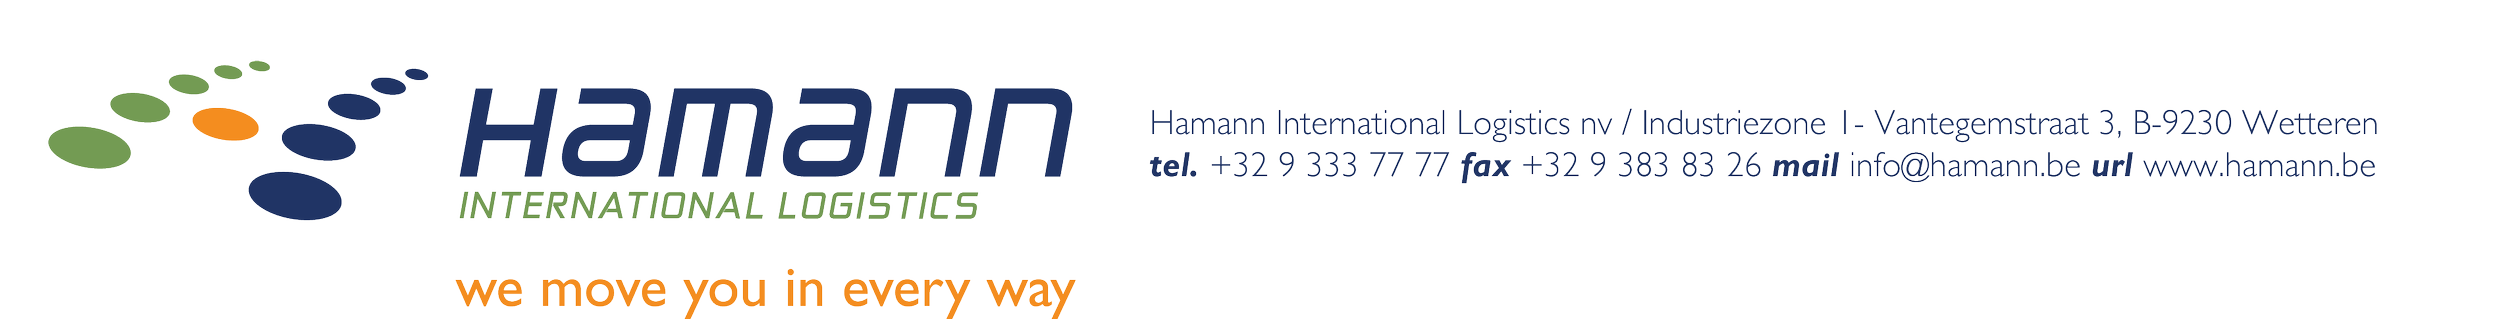 Logo Hamann pantone small baseline+adres copy 2.png